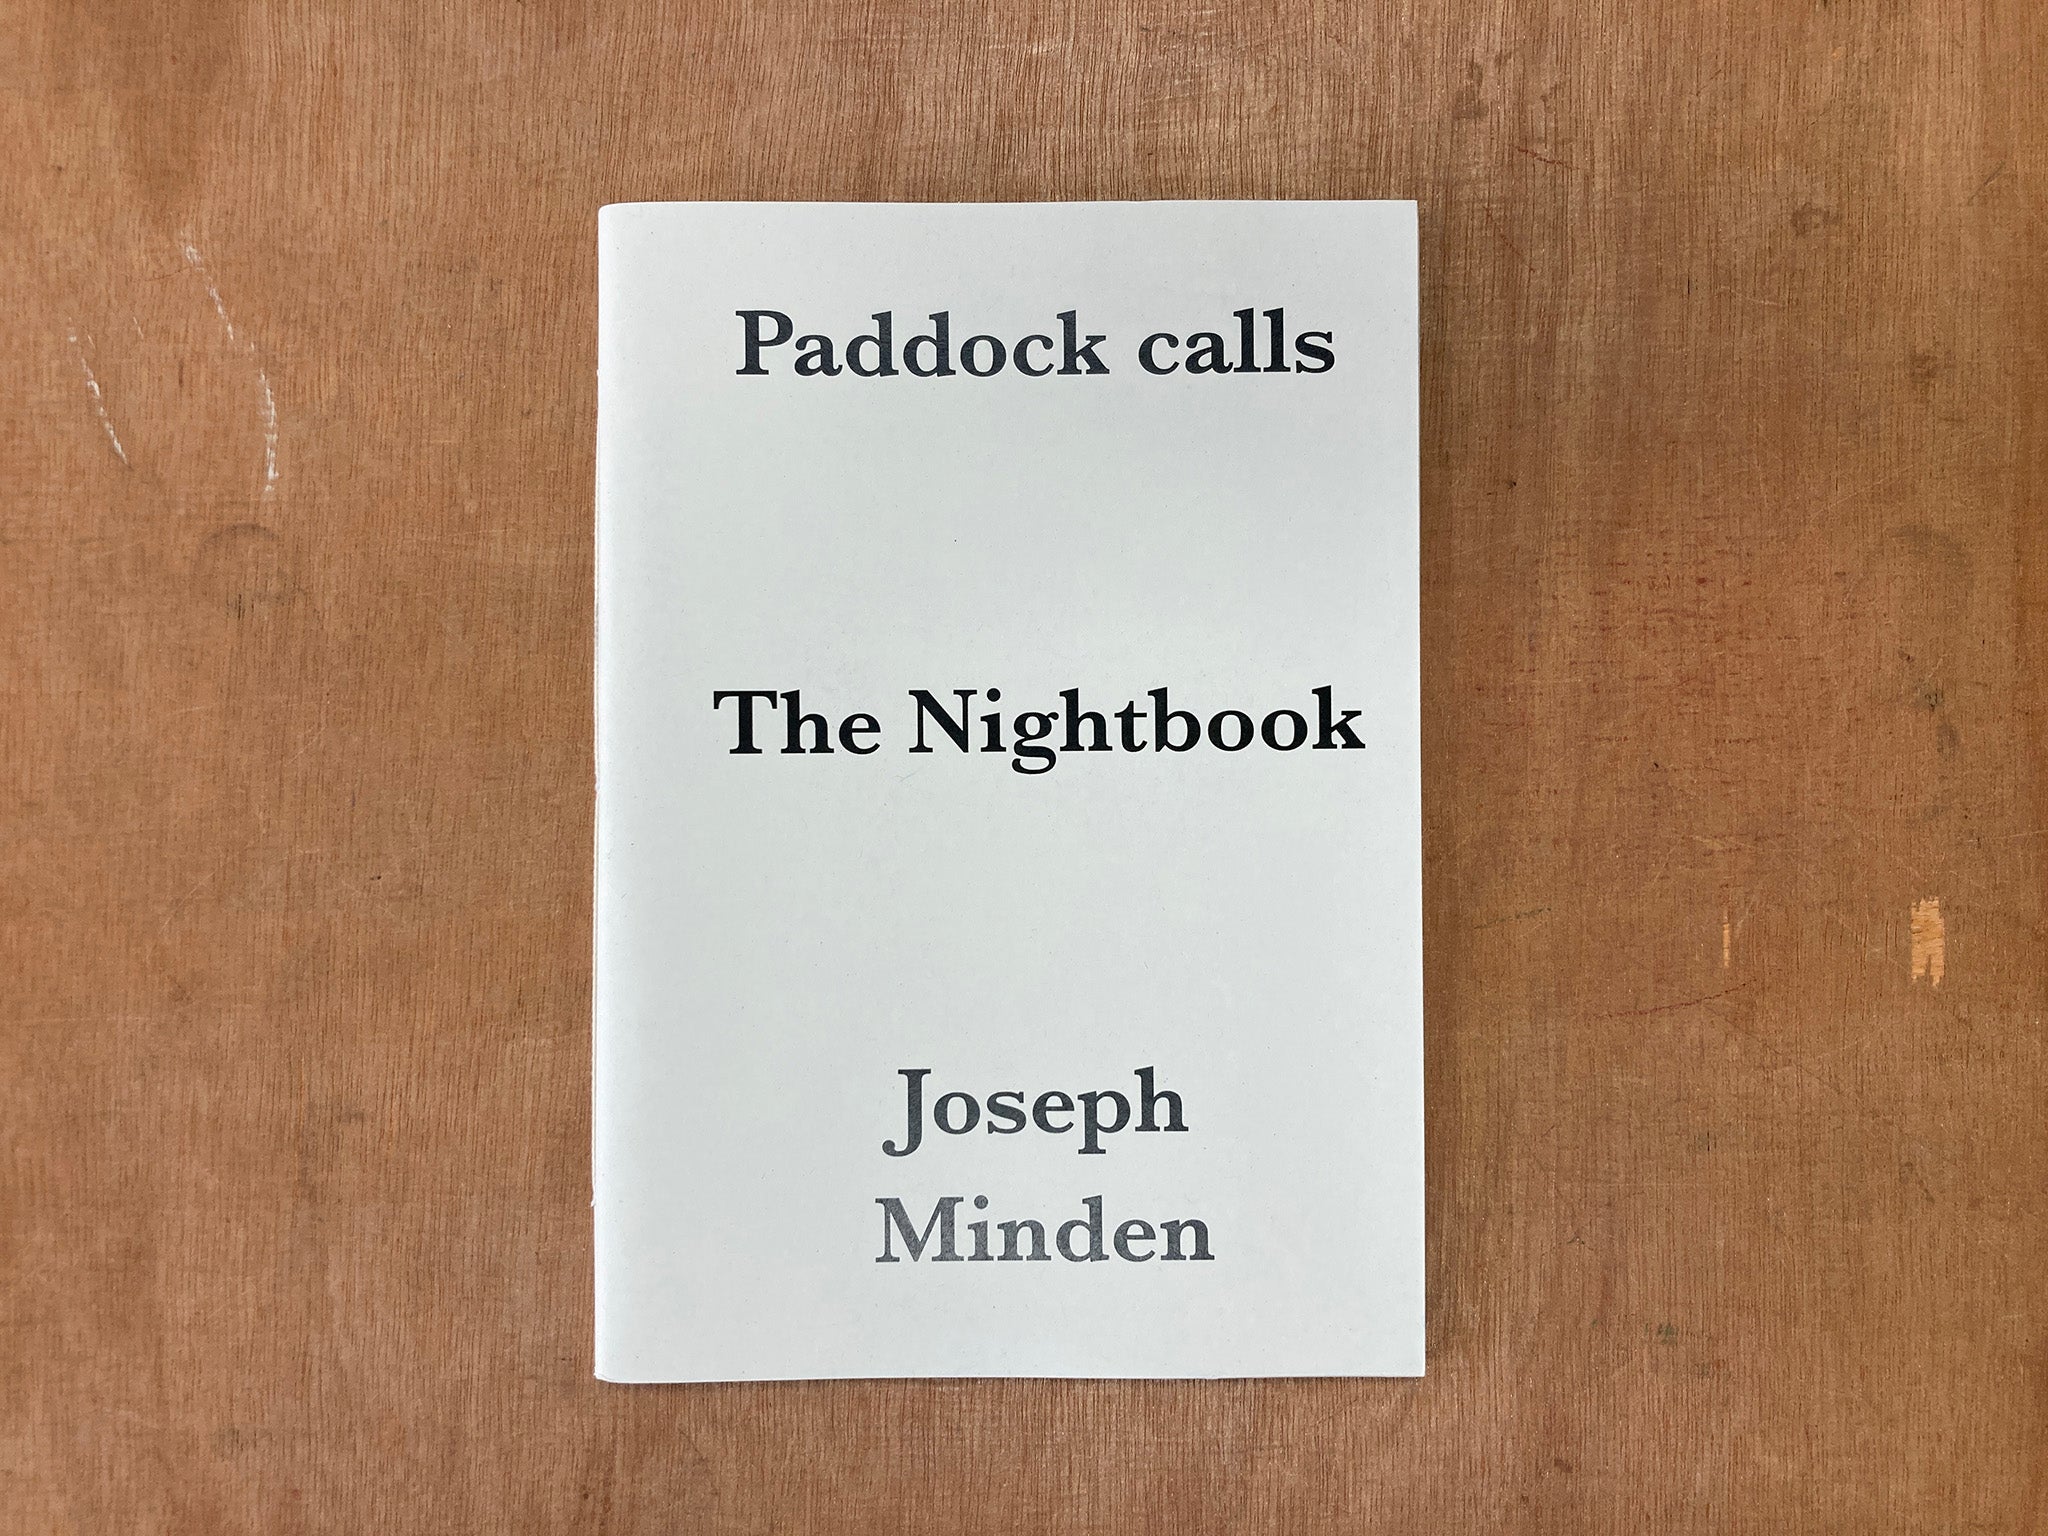 PADDOCK CALLS: THE NIGHTBOOK by Joseph Minden